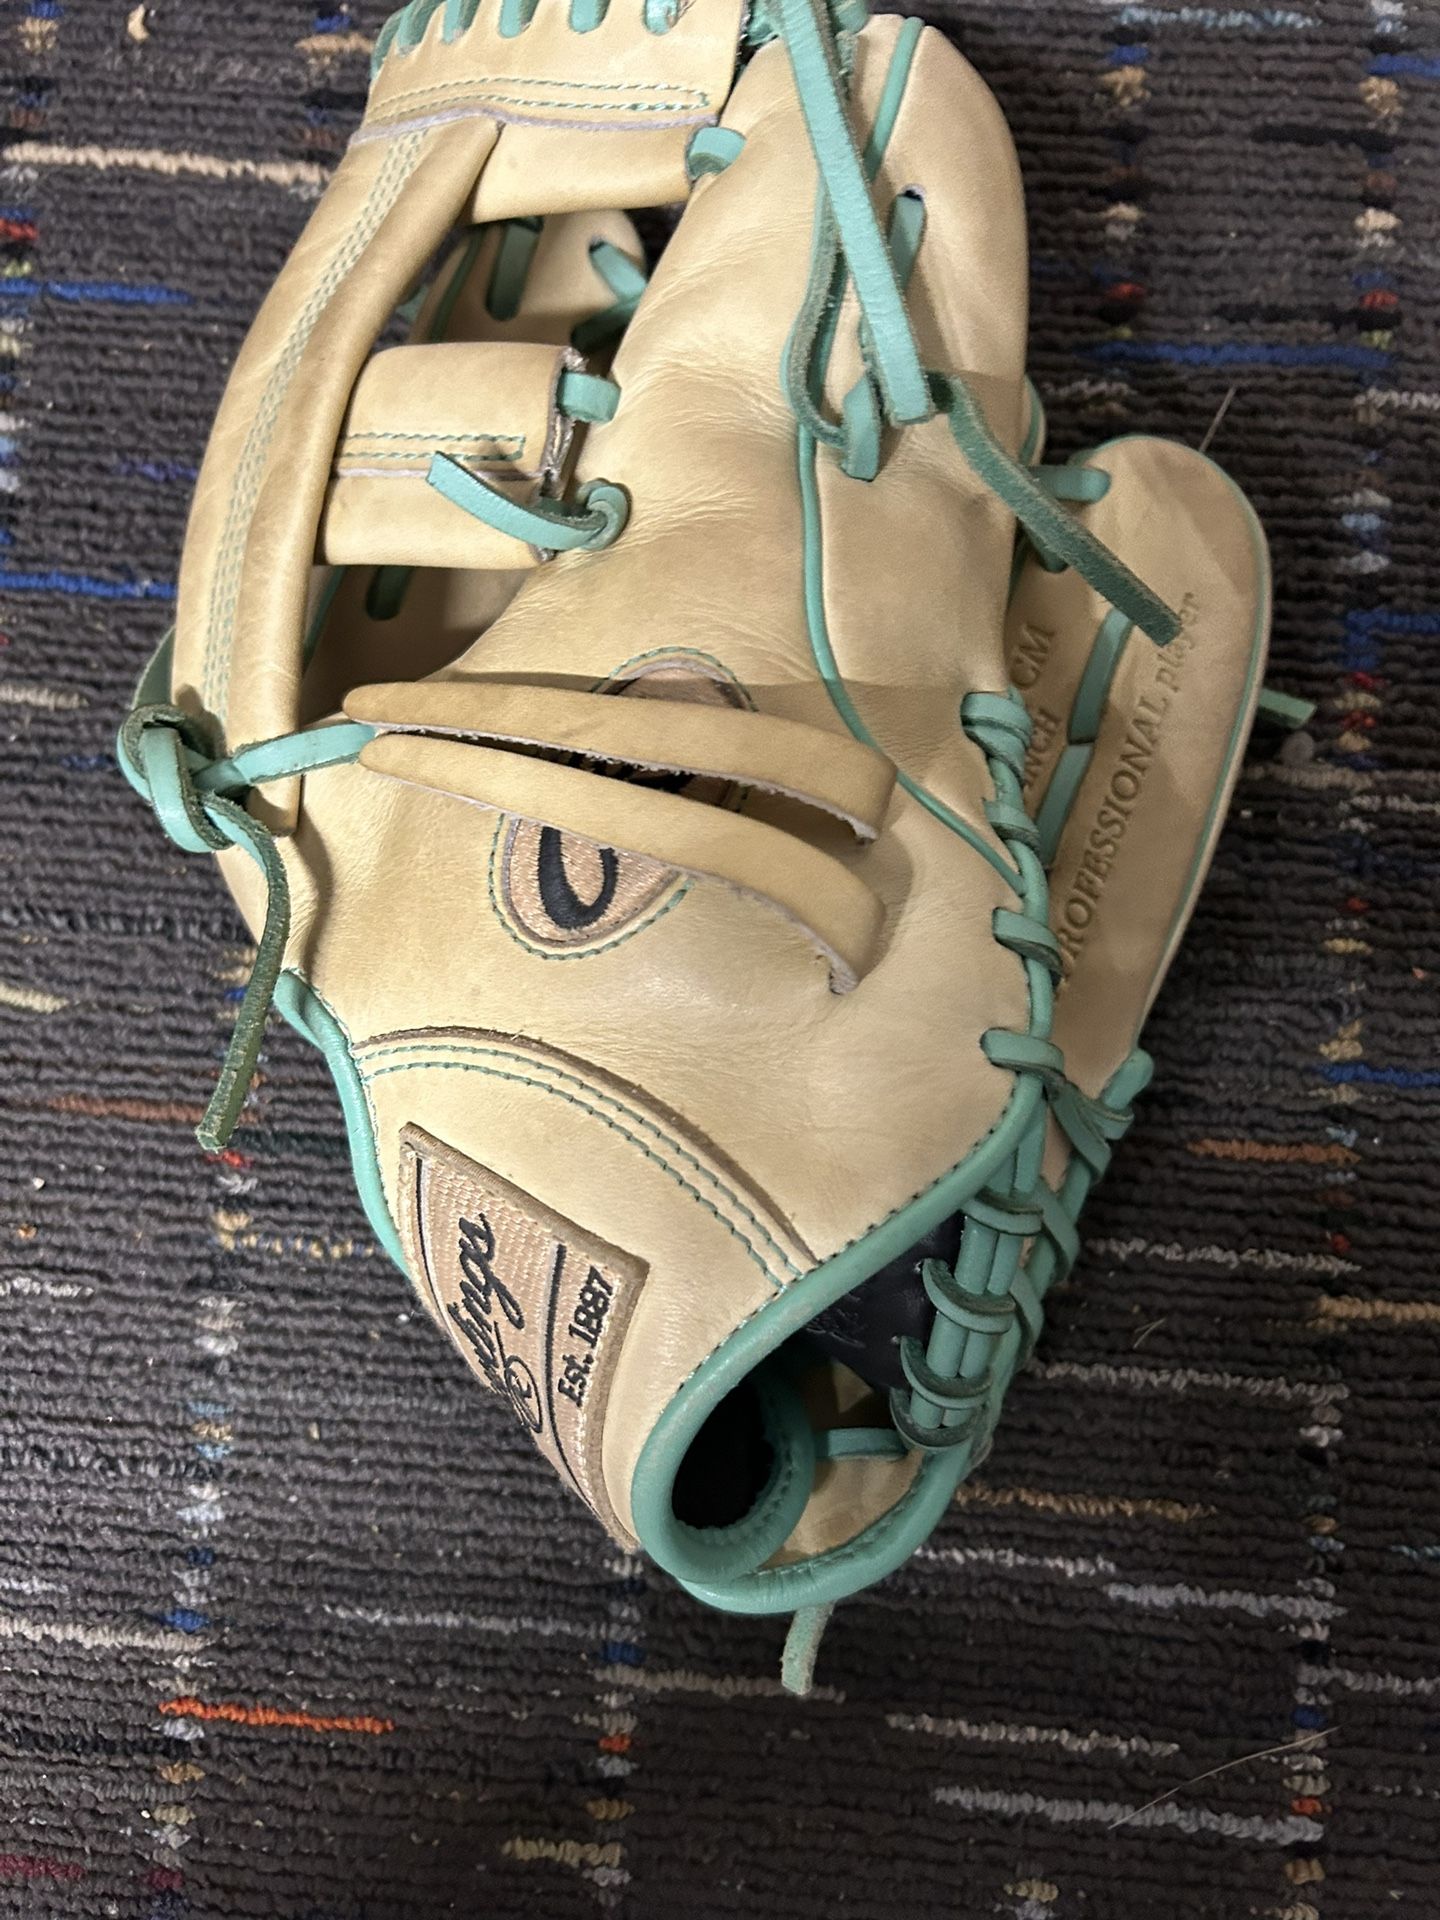 Heart of The Hide Baseball Glove